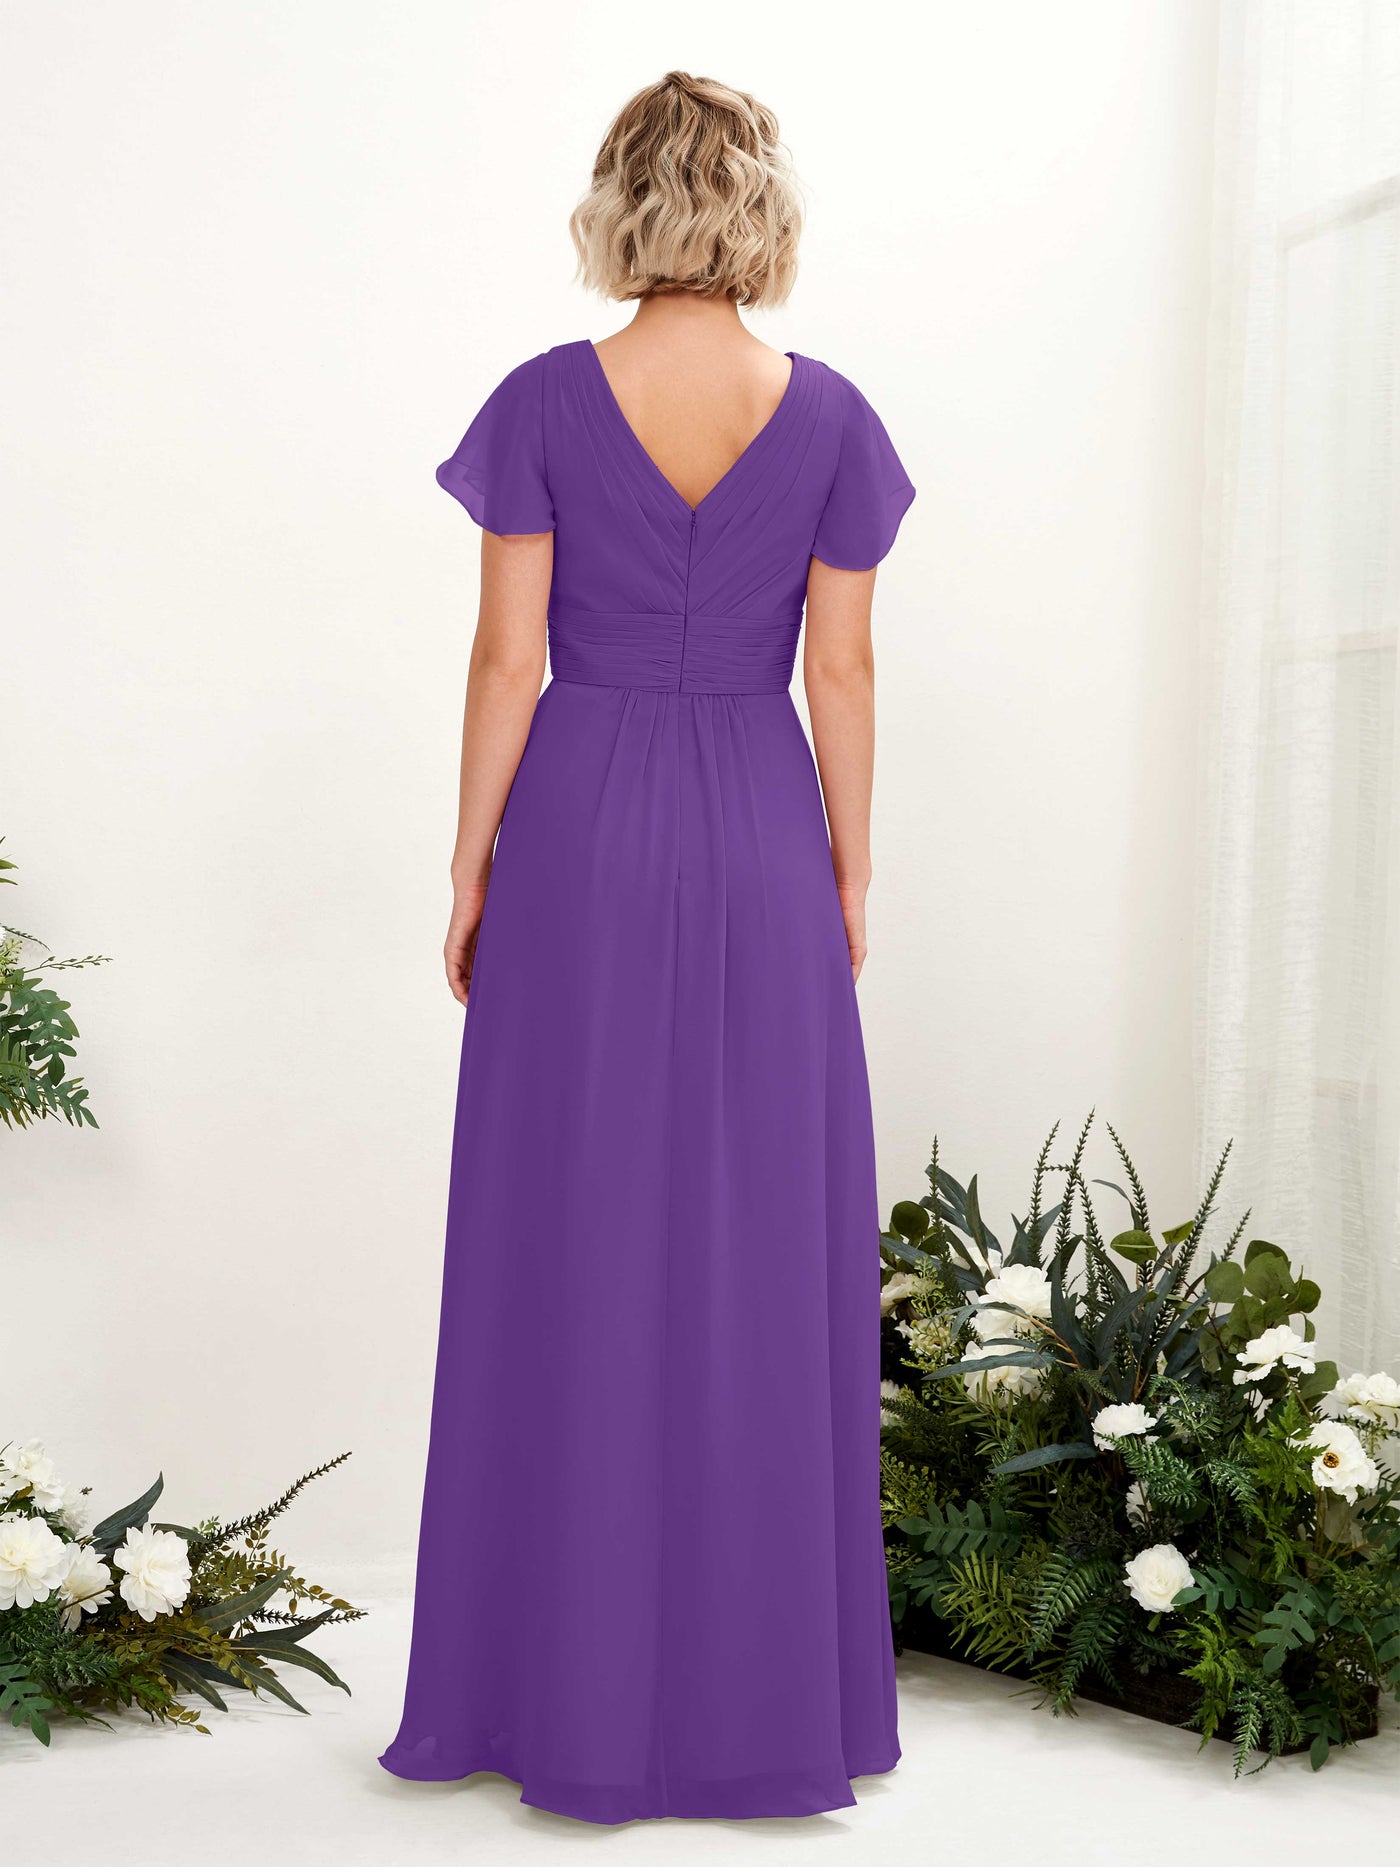 Regency Bridesmaid Dresses Bridesmaid Dress A-line Chiffon V-neck Full Length Short Sleeves Wedding Party Dress (81224328)#color_regency